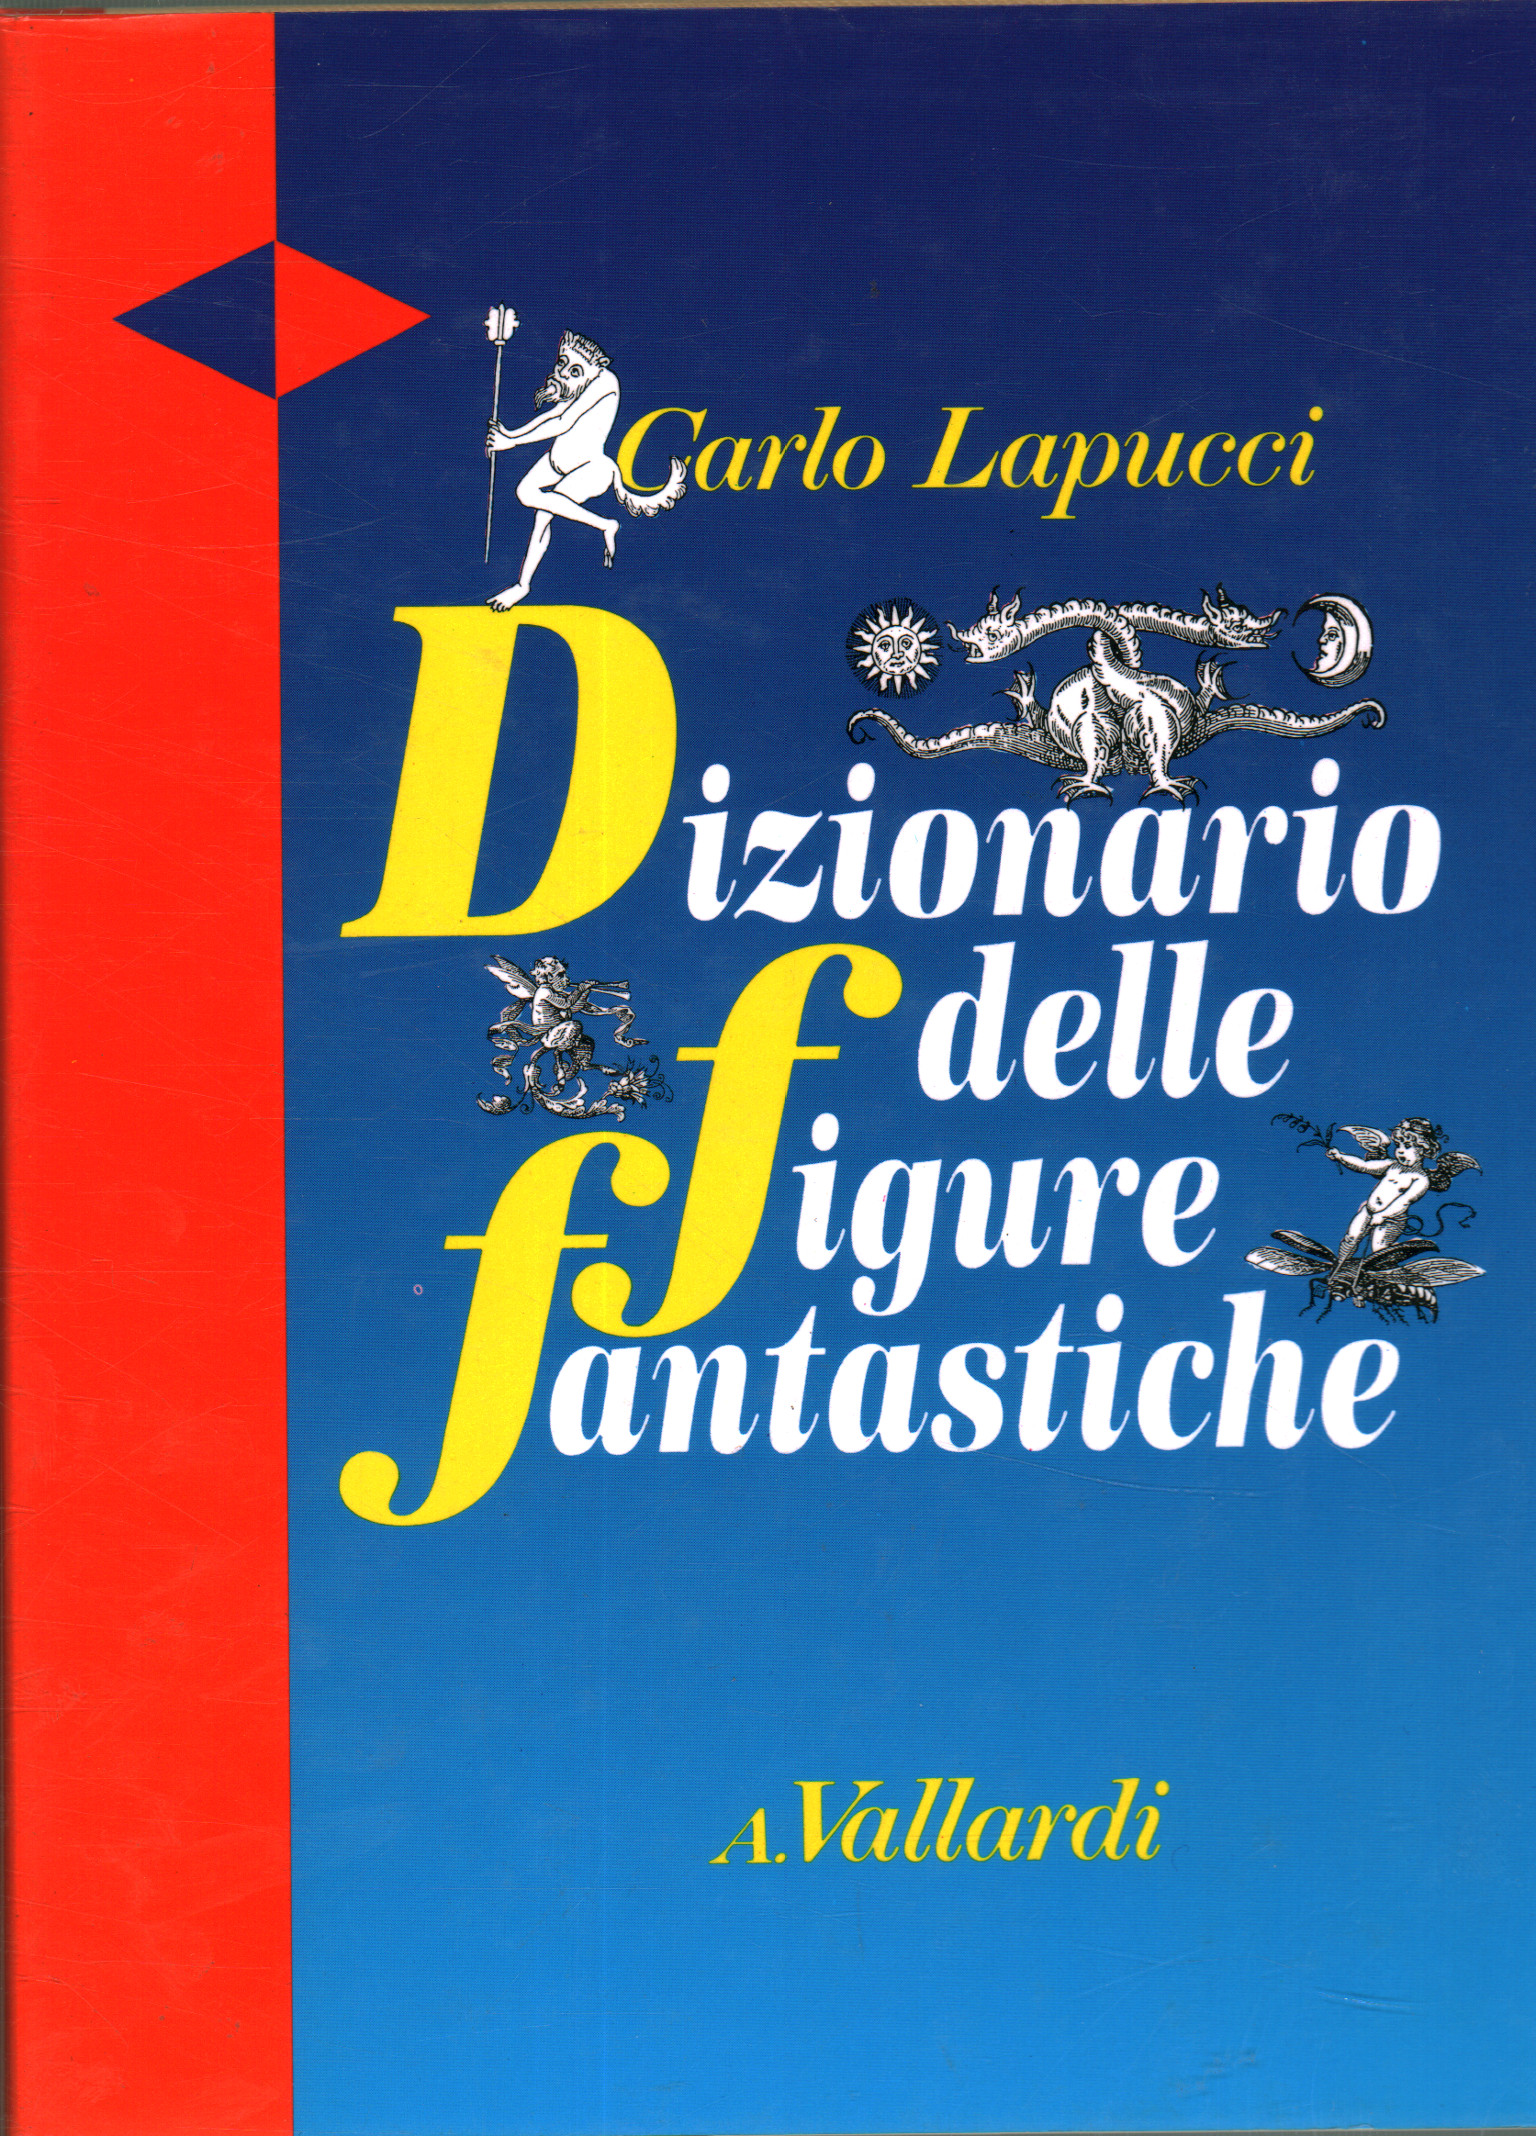 Dictionary of Fantastic Figures, Carlo Lapucci